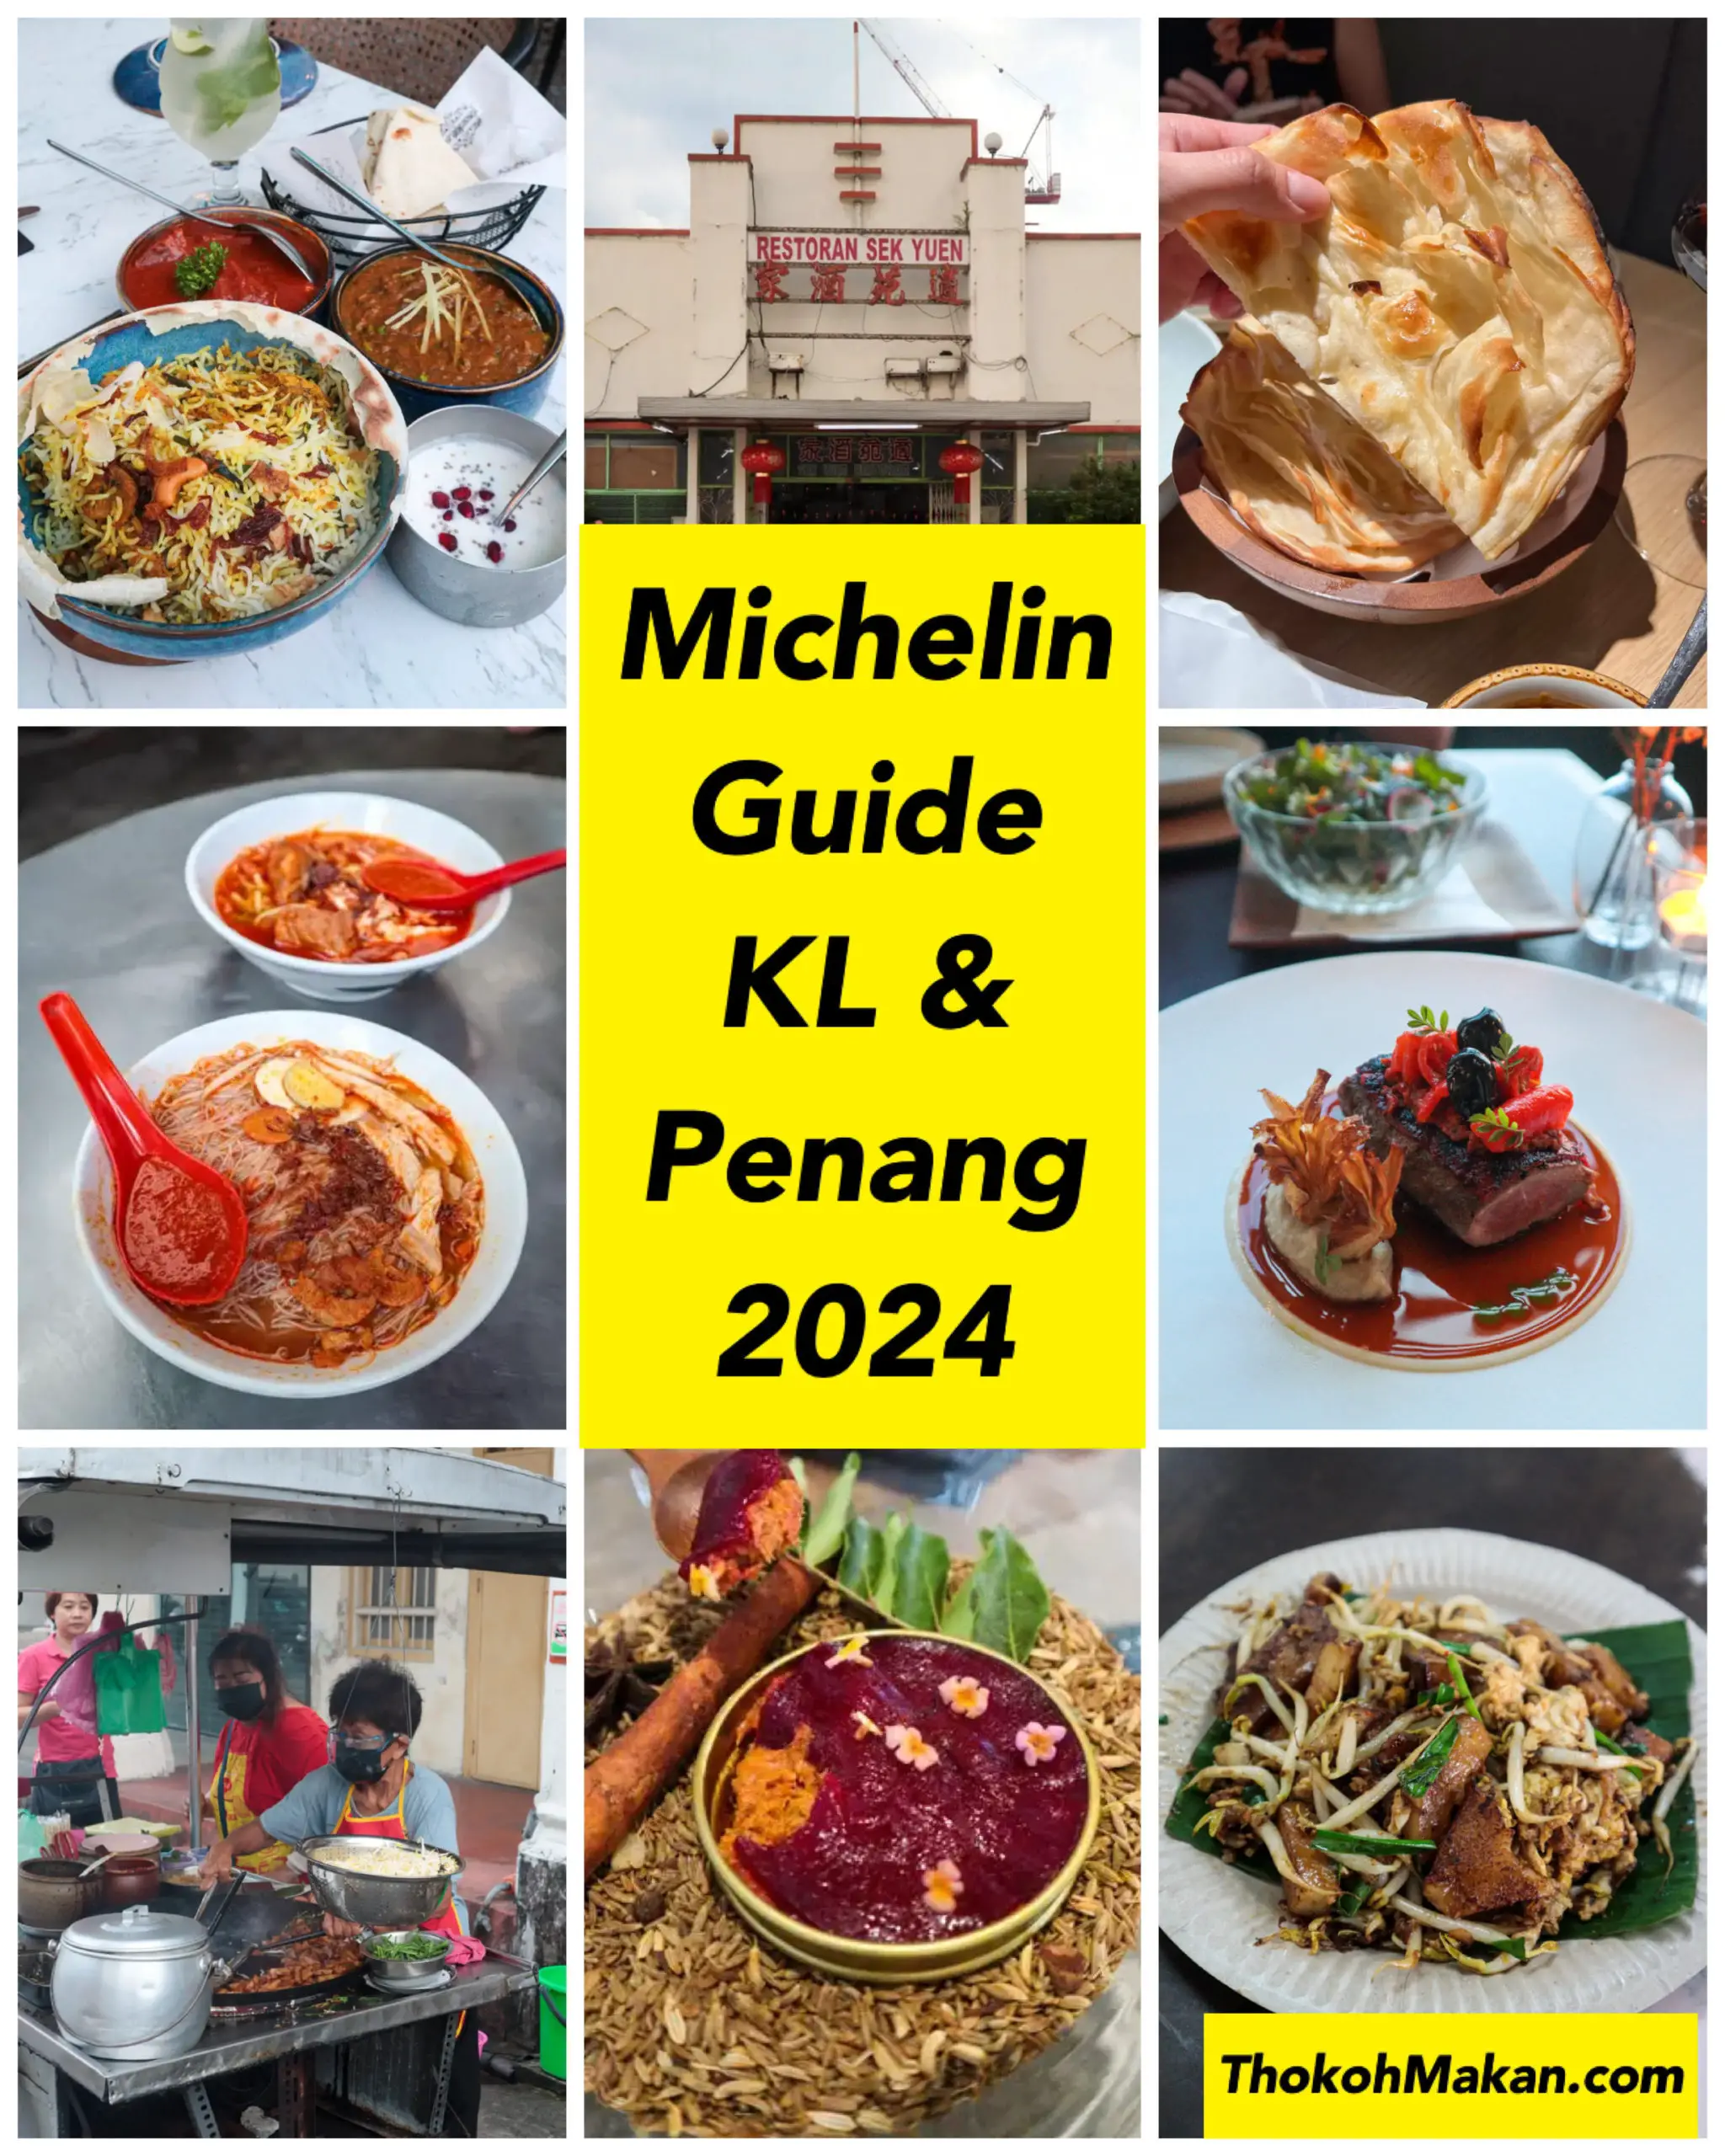 Michelin Guide KL & Penang 2024